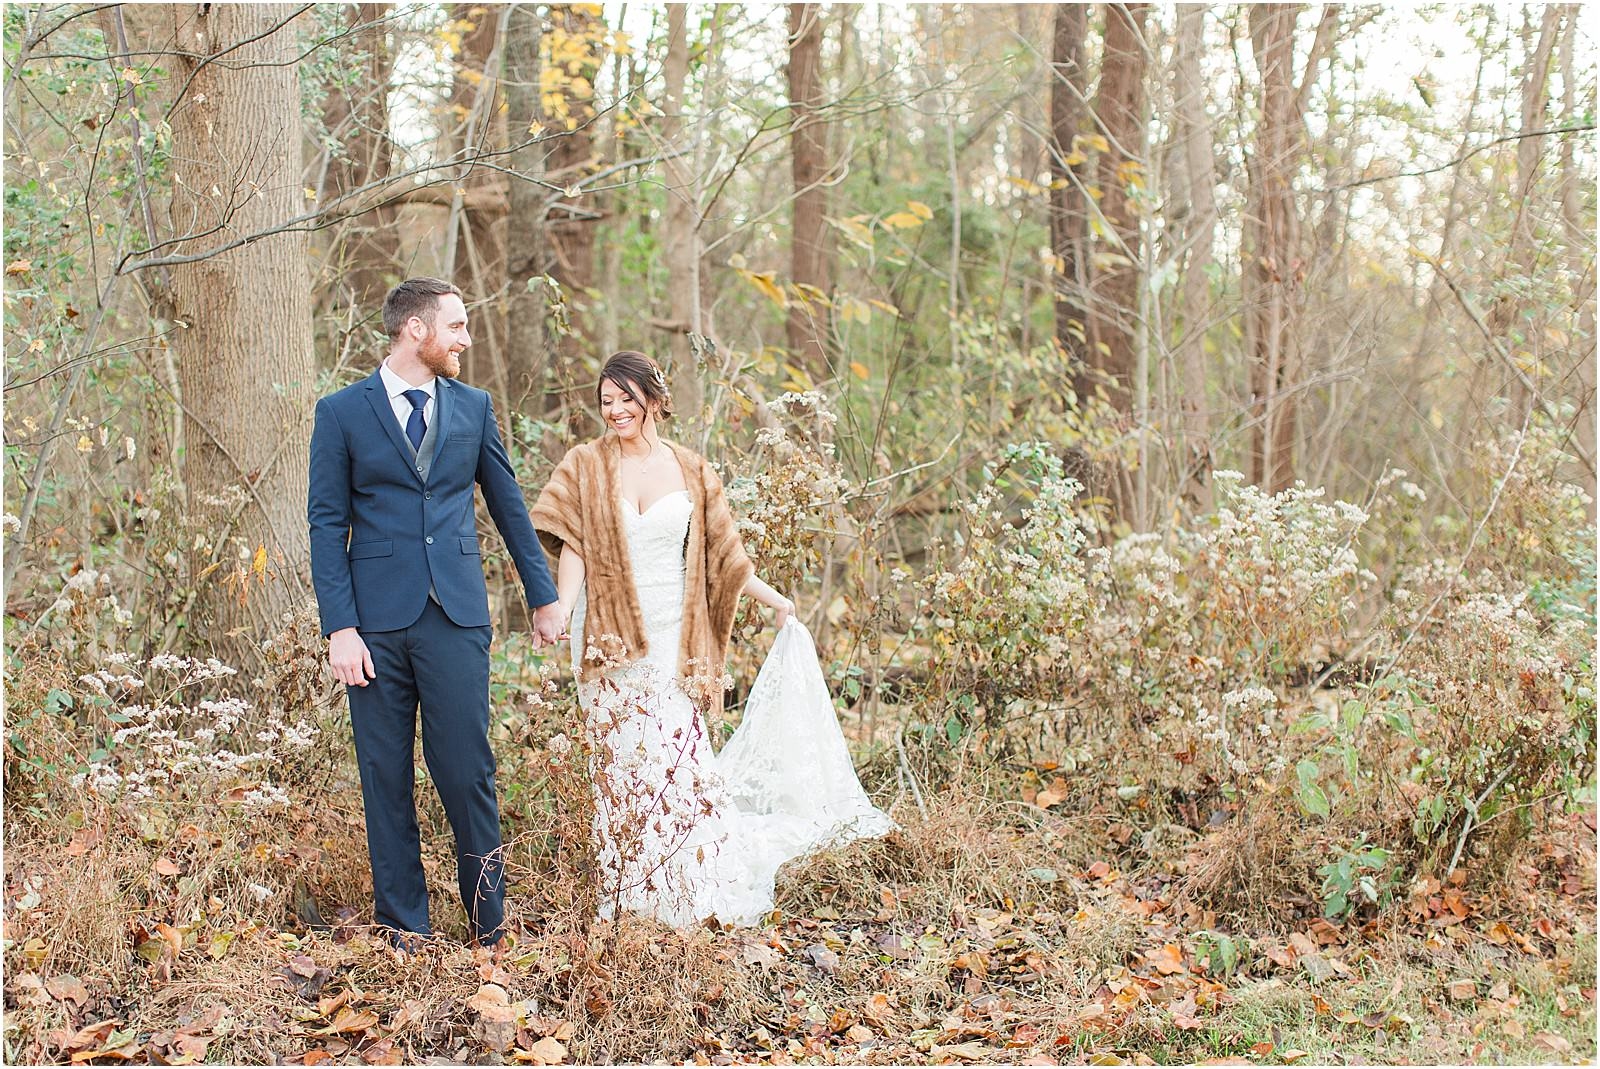 Walker and Alyssa's intimate fall wedding in Southern Indiana. | Wedding Photography | The Corner House Wedding | Southern Indiana Wedding | #fallwedding #intimatewedding | 083.jpg